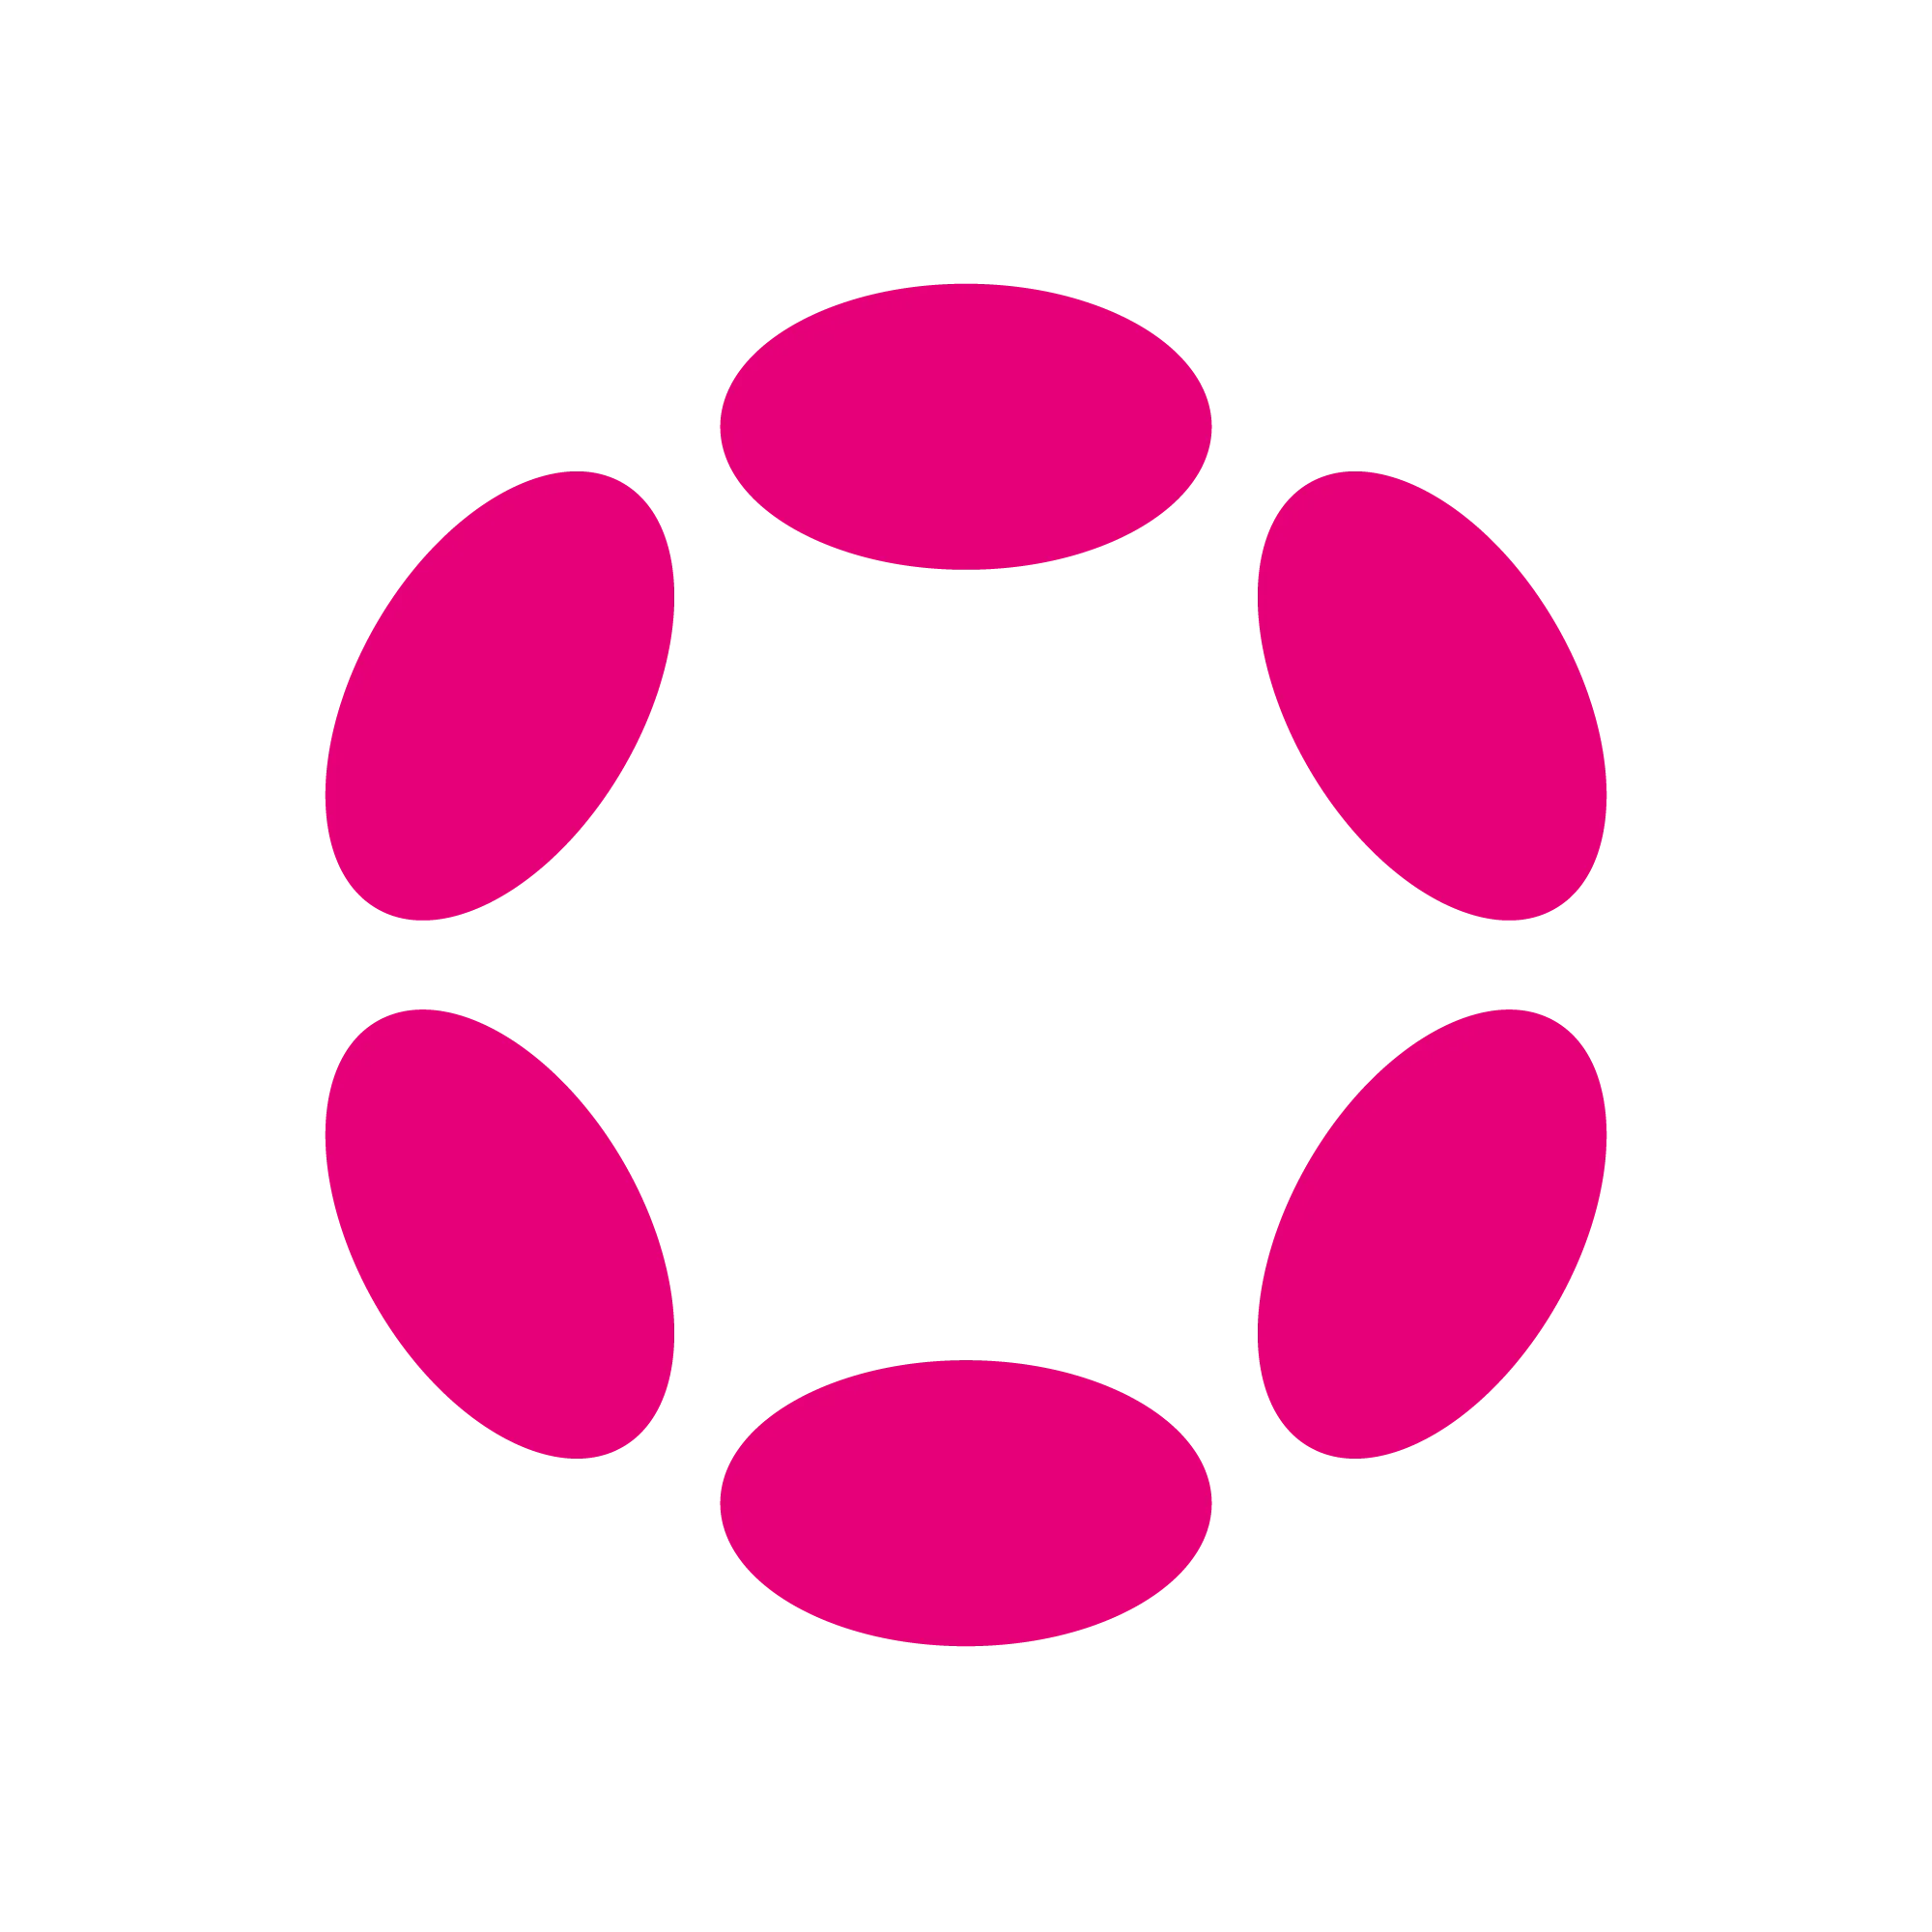 Polkadot logo in png format